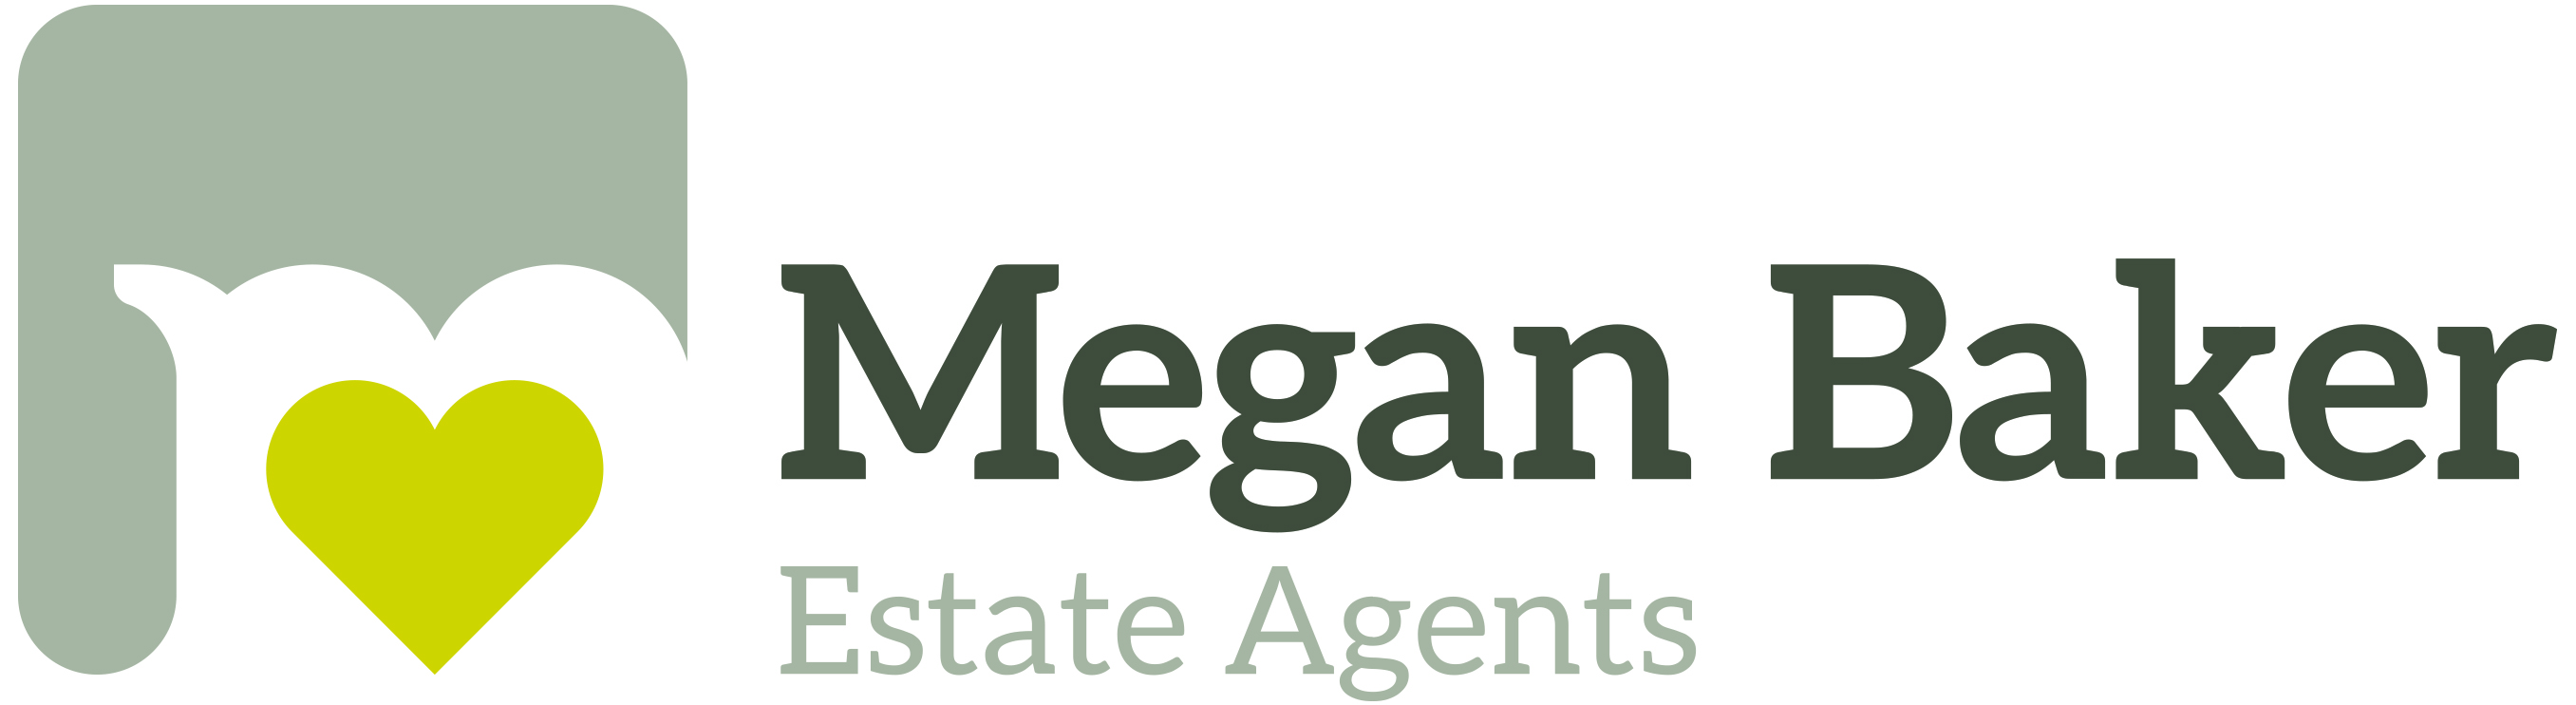 Megan Baker landscape Logo.jpg